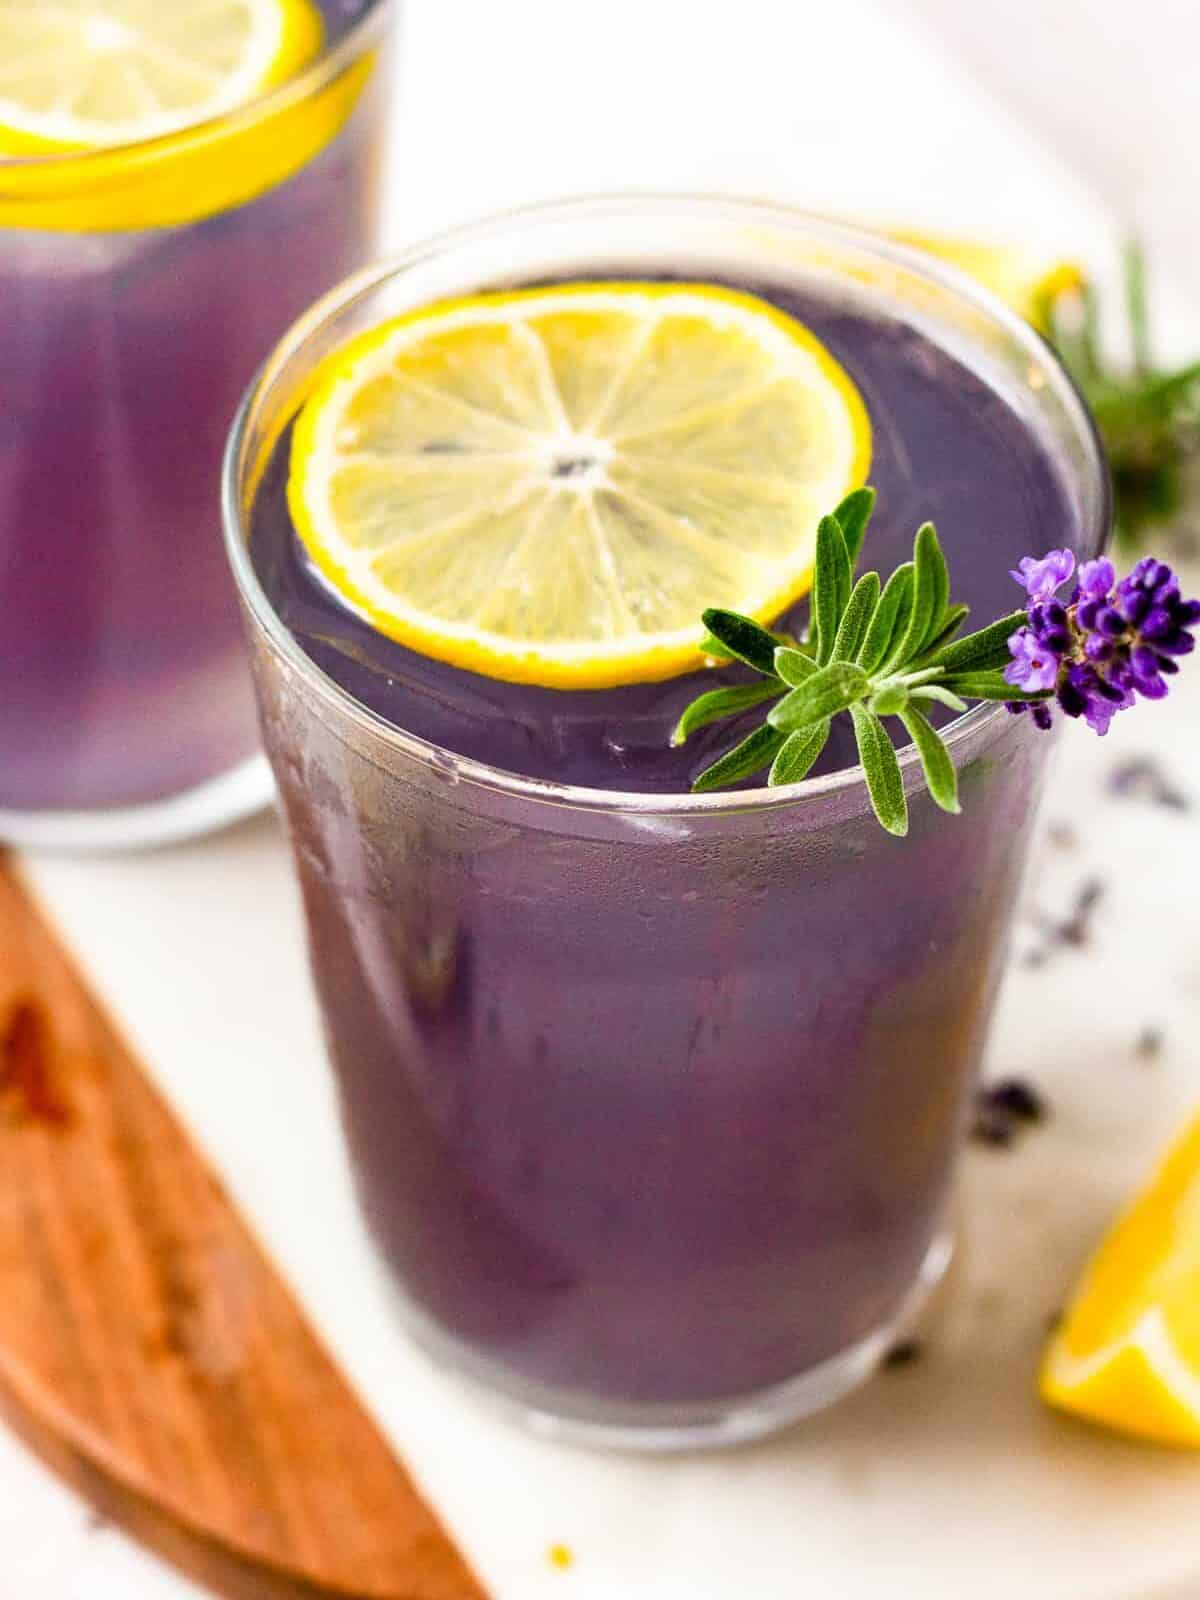 glass of lavender lemonade with a slice of lemon and lavender as garnish